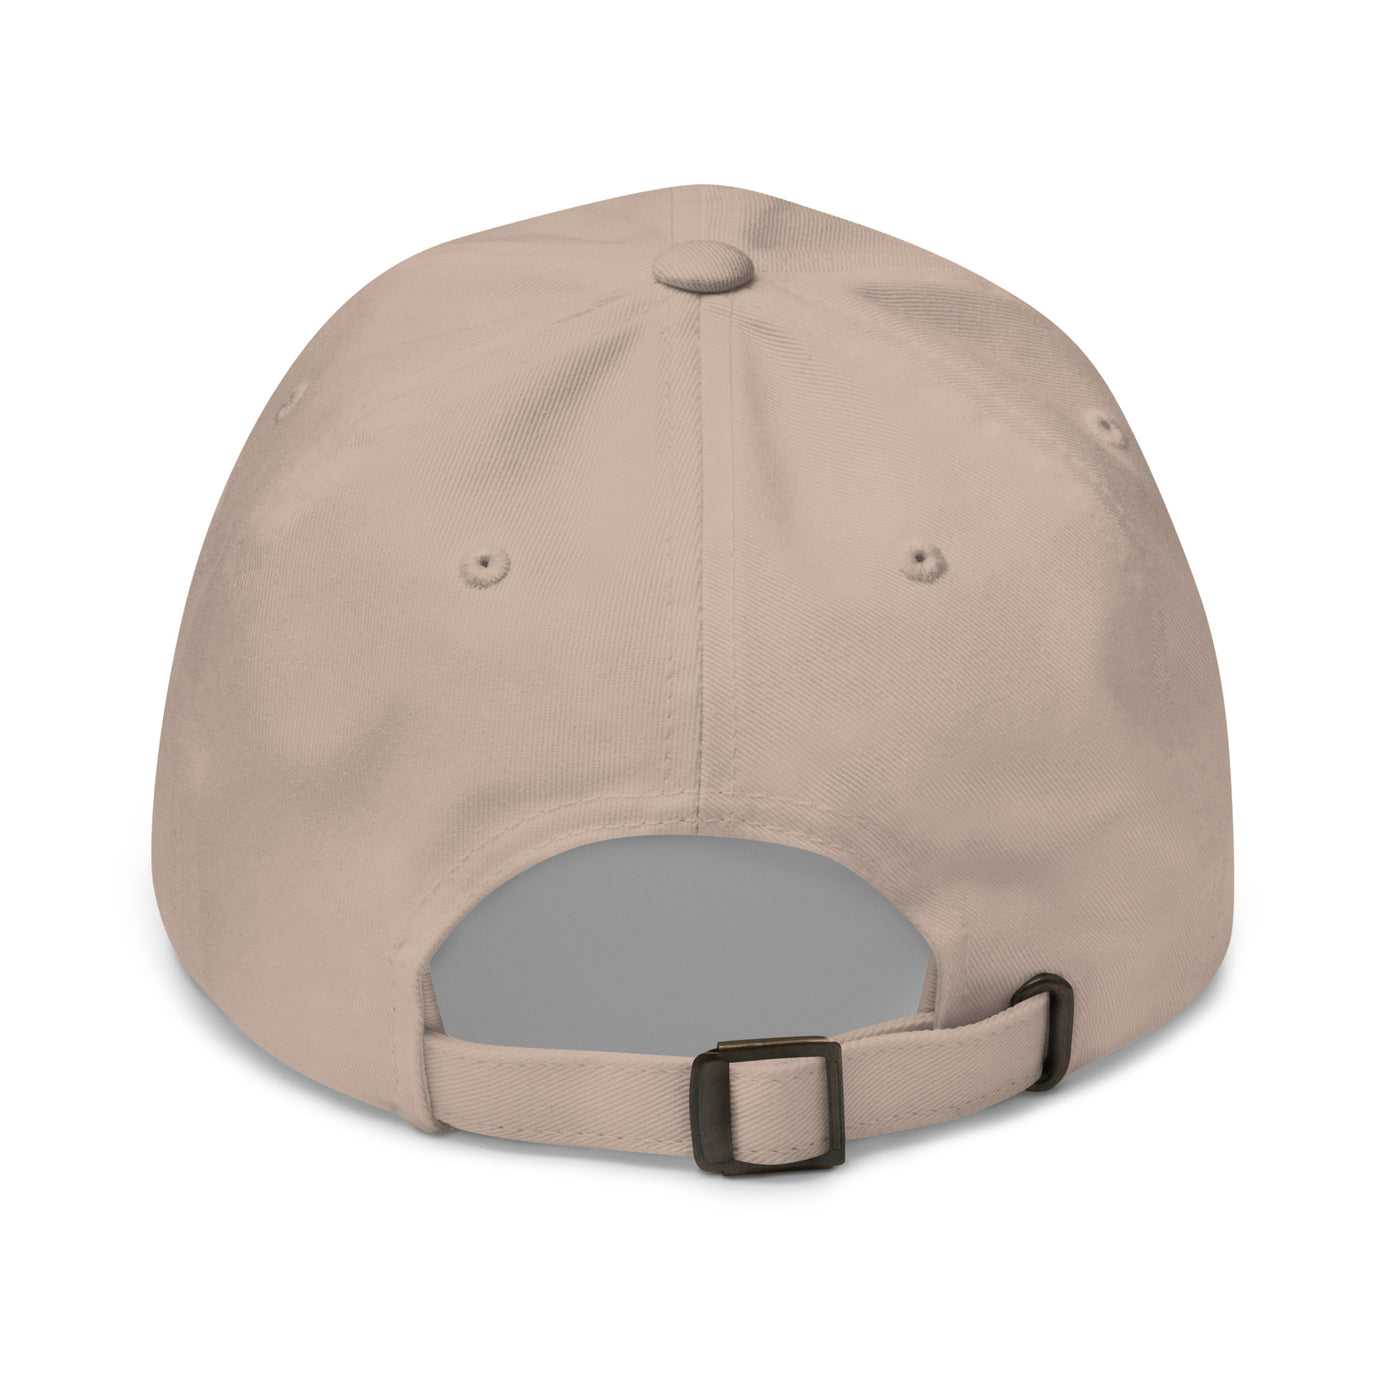 Angel Unisex Hat